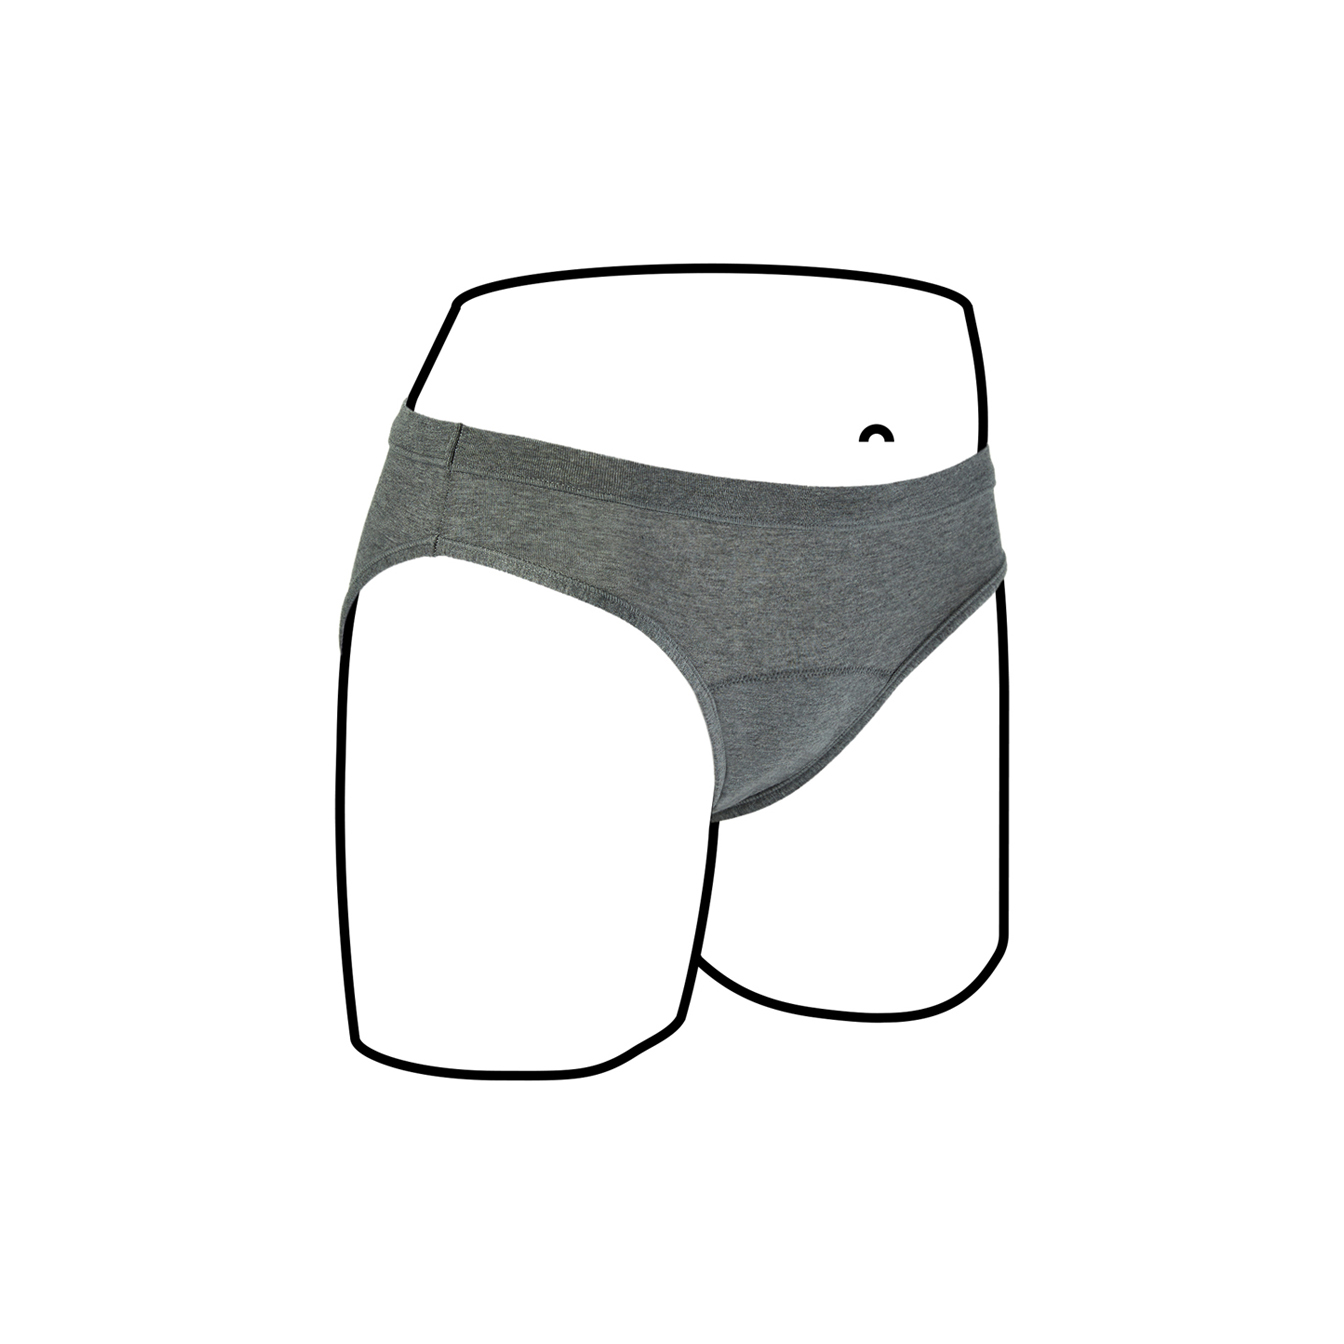 Thinx Teen's 3pc Classic Combo Briefs Period Underwear - Black/Blue/Gray  15/16